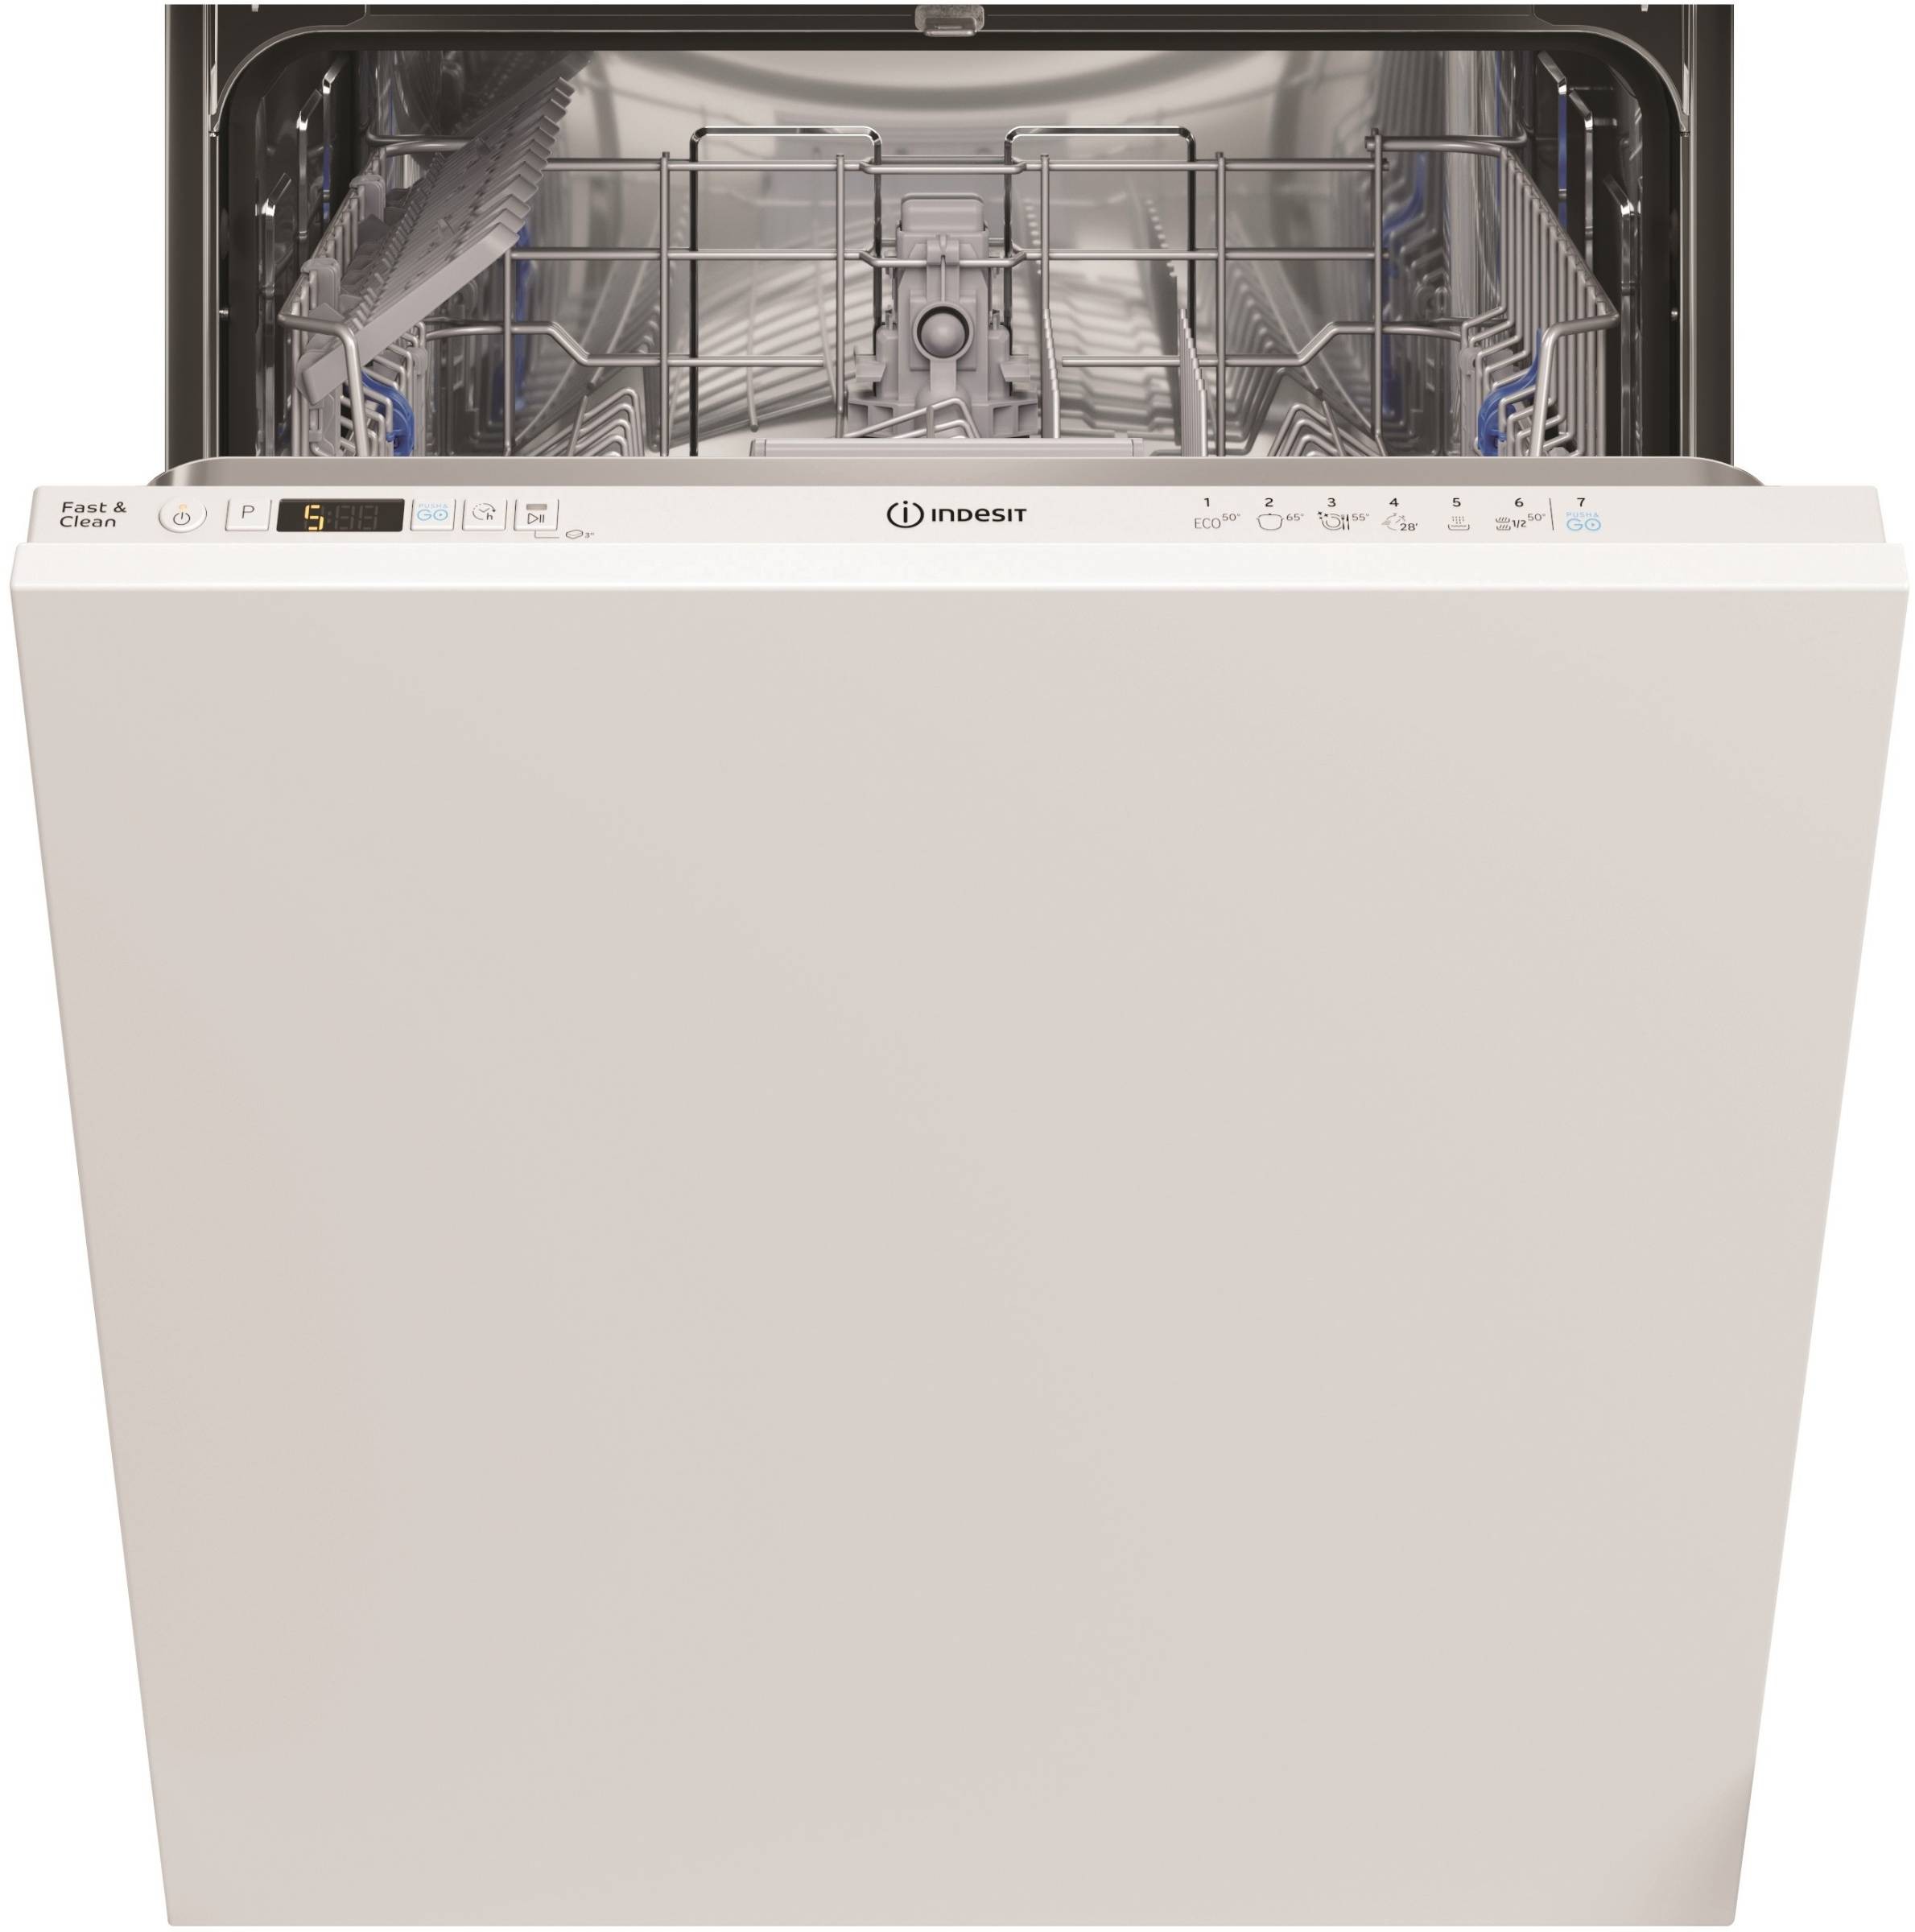 INDESIT Lave vaisselle tout integrable 60 cm Fast & Clean 13 couverts  DIC3B+16AS